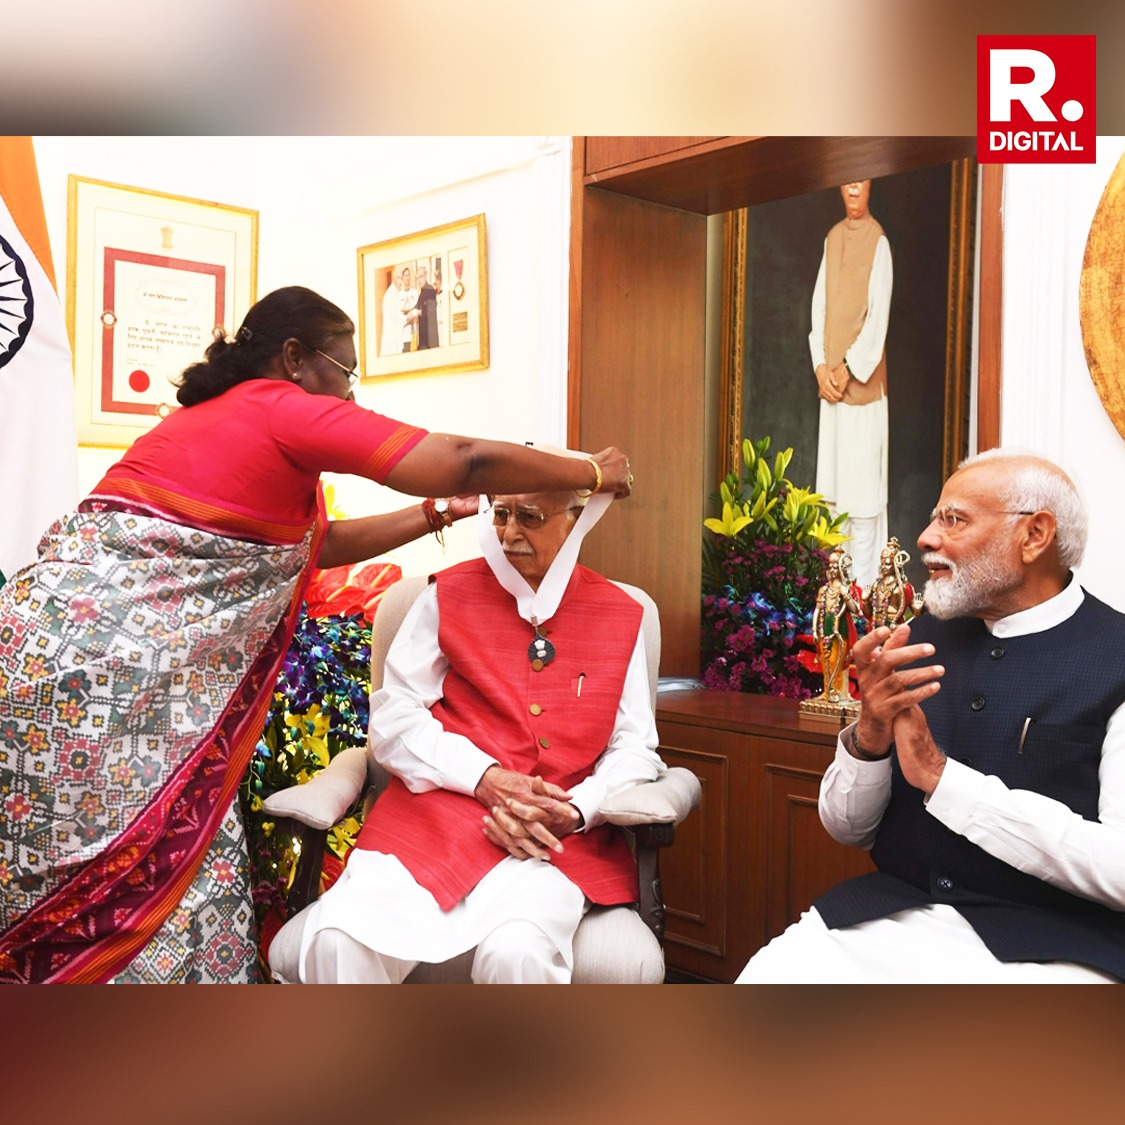 President Droupadi Murmu conferred Bharat Ratna upon veteran BJP leader LK Advani at the latter's residence in Delhi.
.
.
.
#DroupadiMurmu | #LKAdvani | #BharatRatna | #NarendraModi | #RepublicWorld | #RepublicDigital